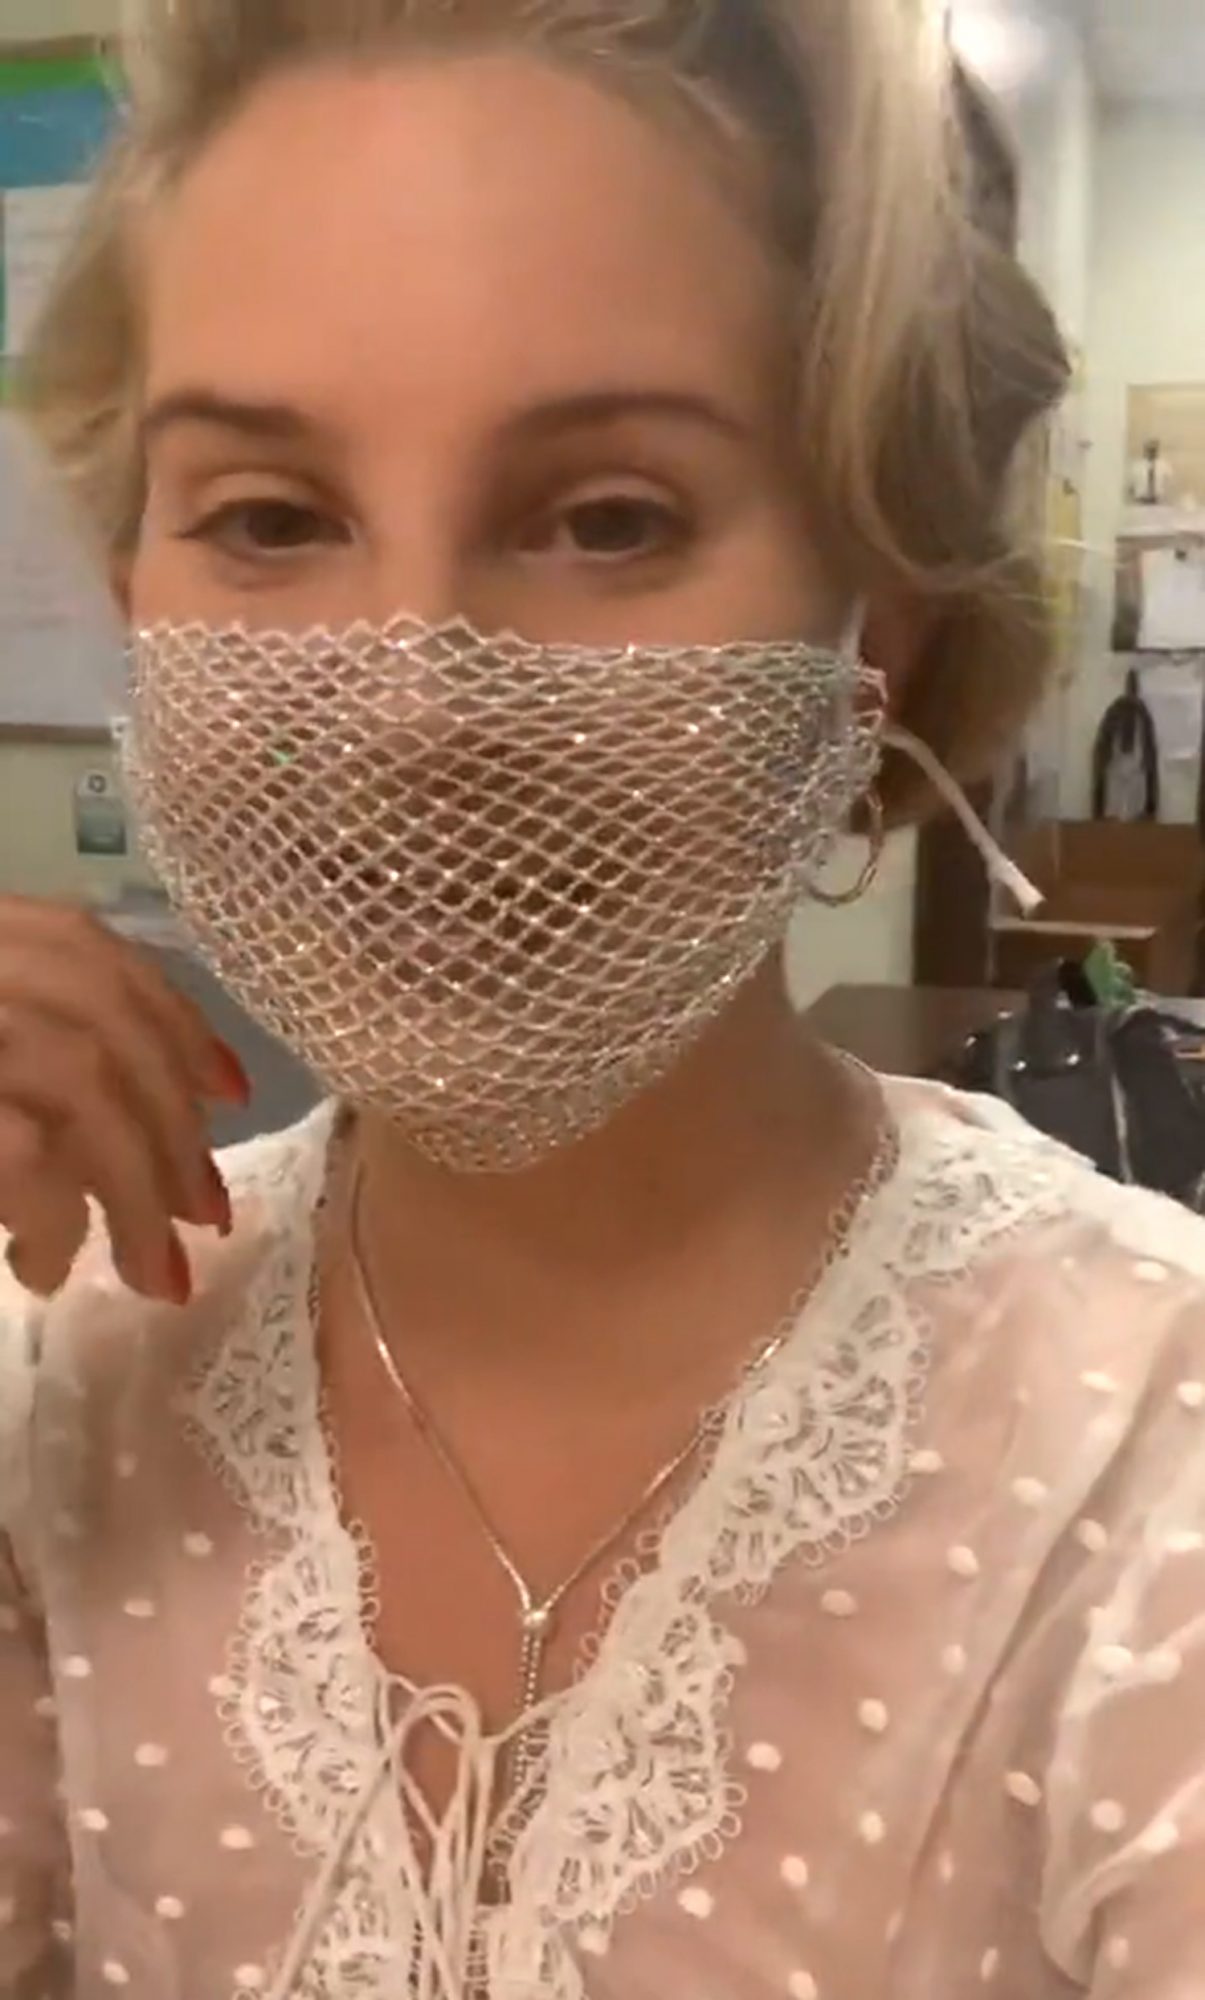 Lana Del Rey in a mesh mask on Instagram